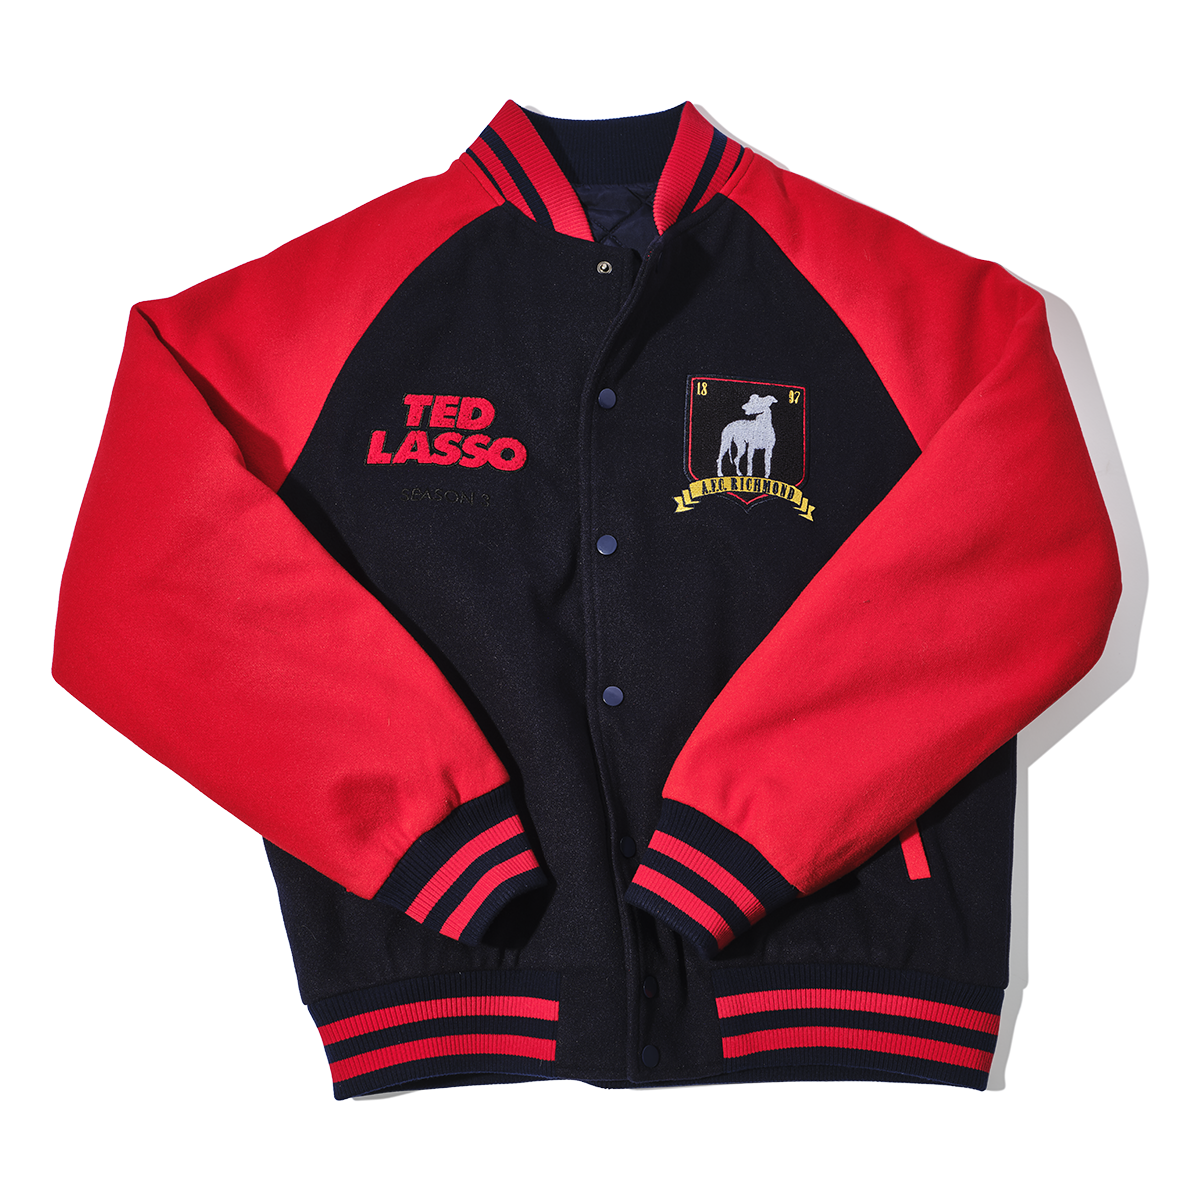 Ted Lasso Jacket